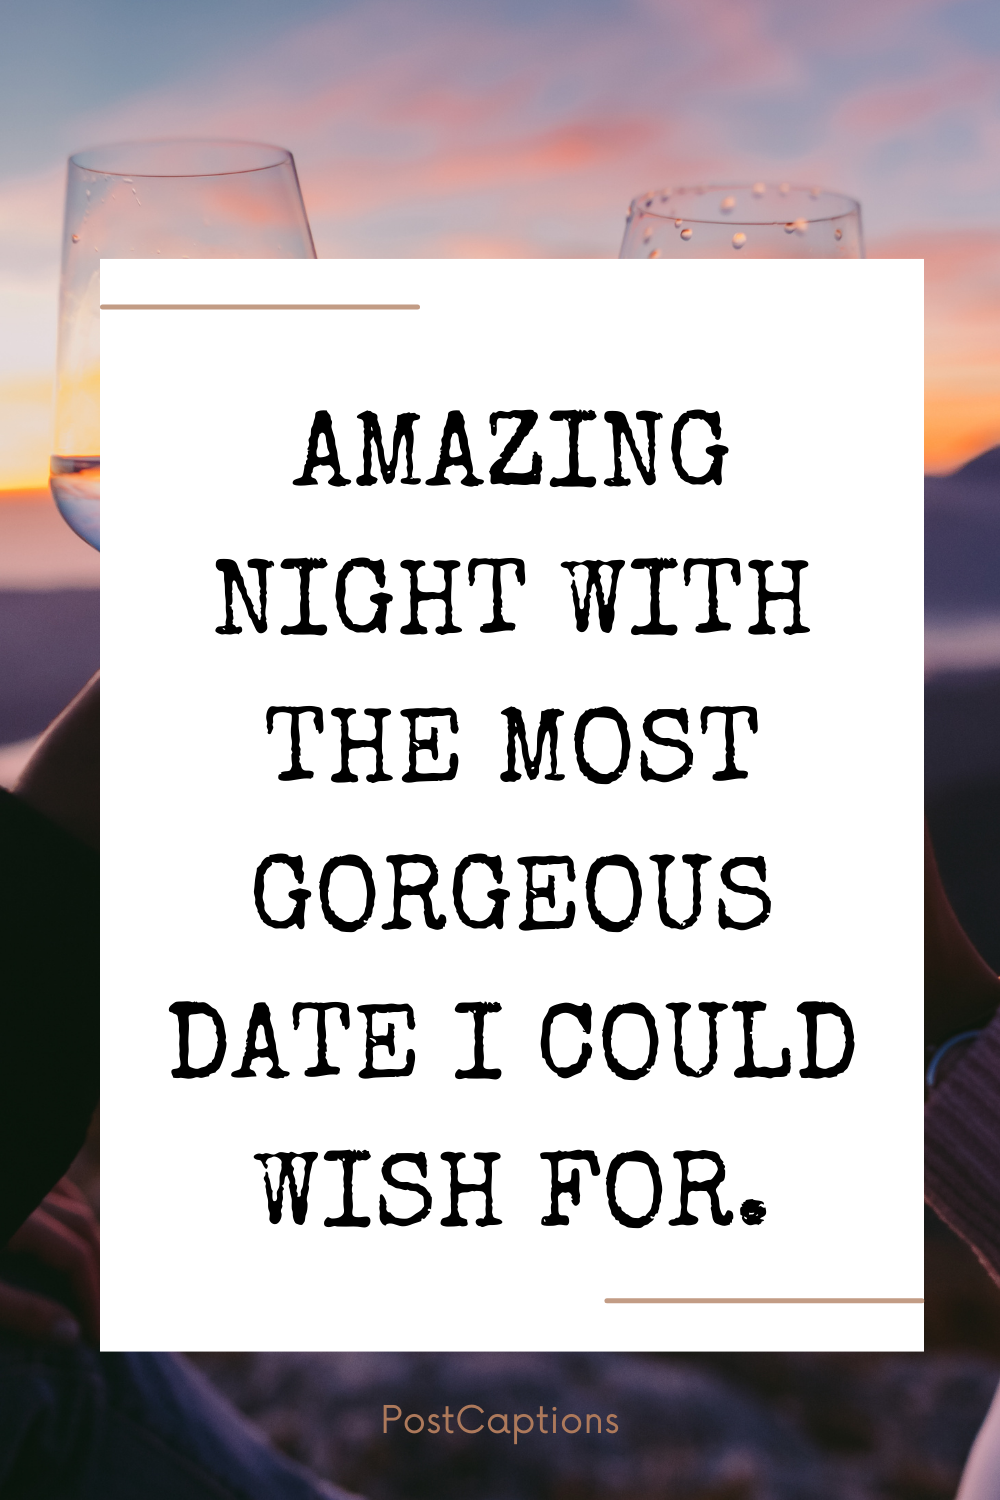 Date night captions